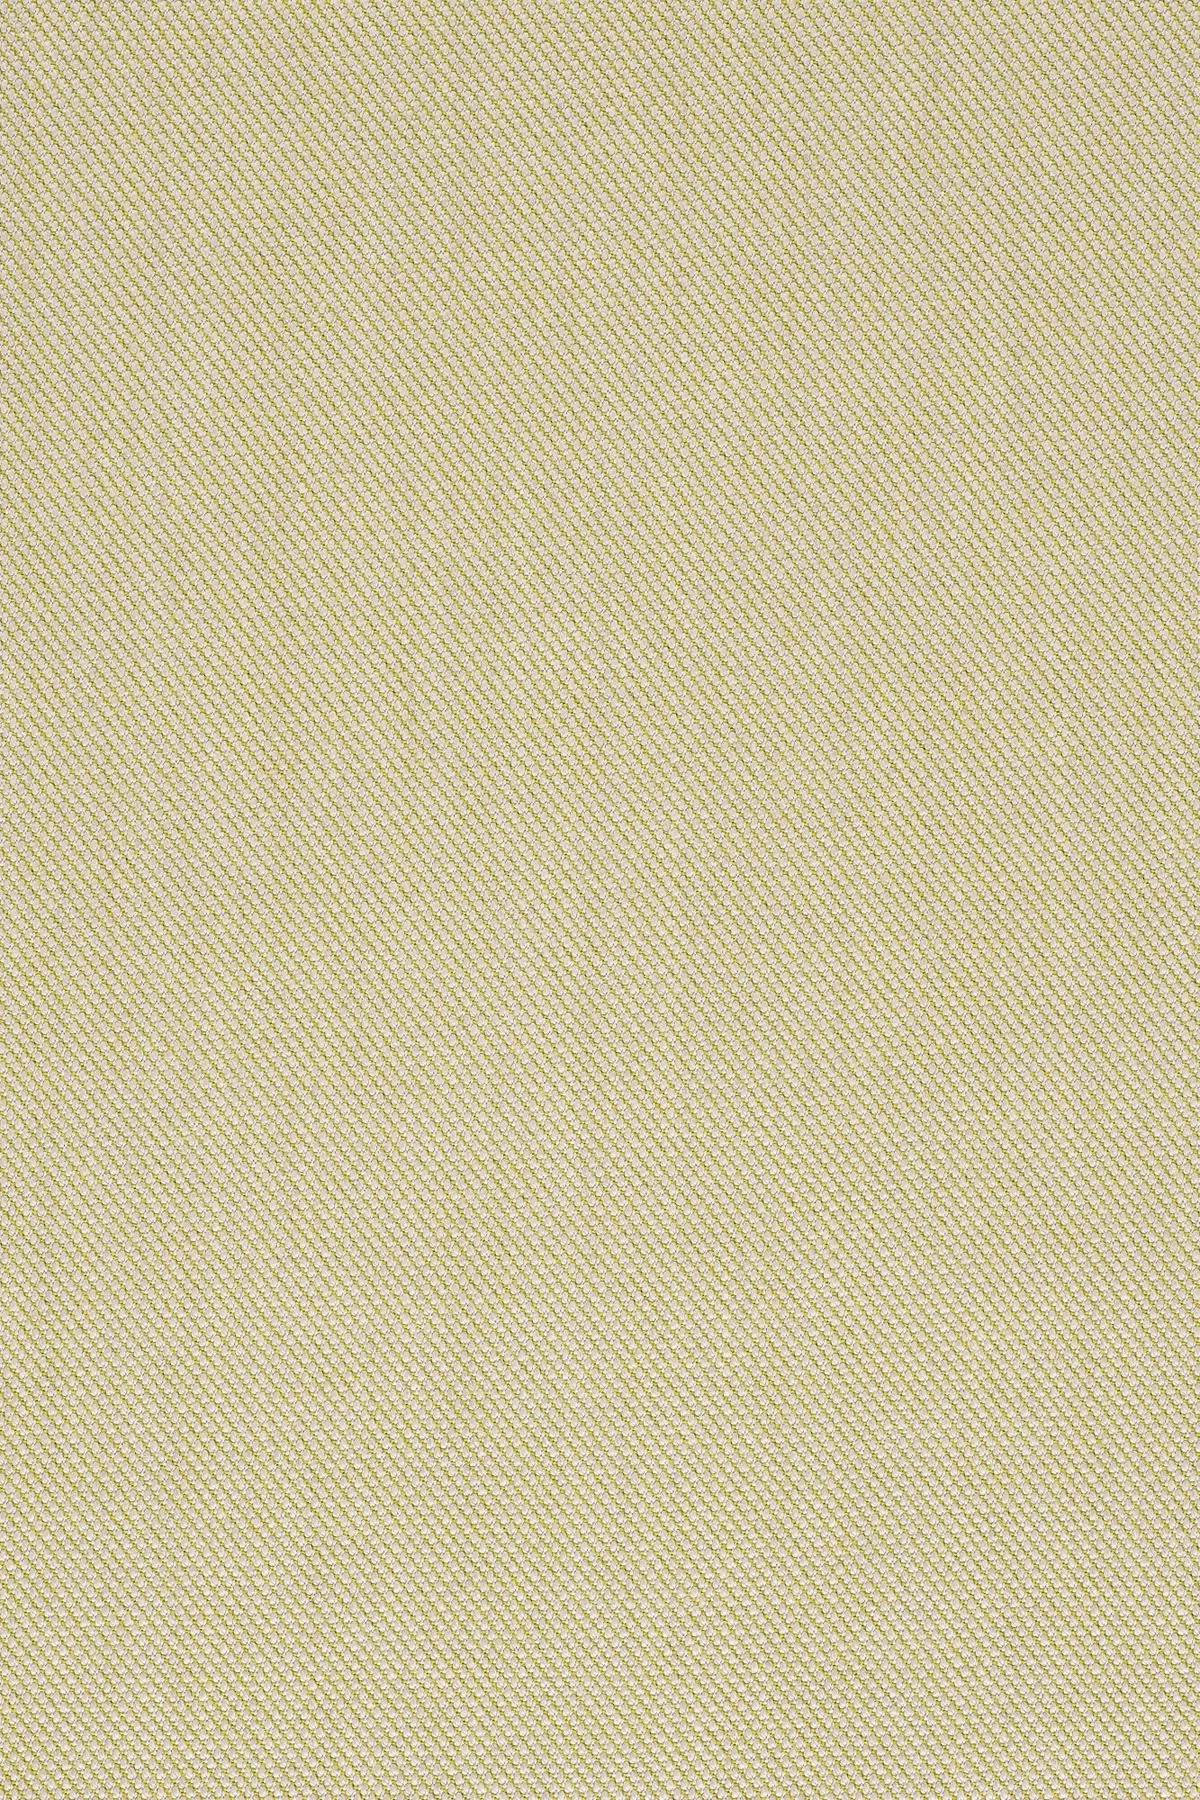 Fabric sample Steelcut Trio 3 236 yellow